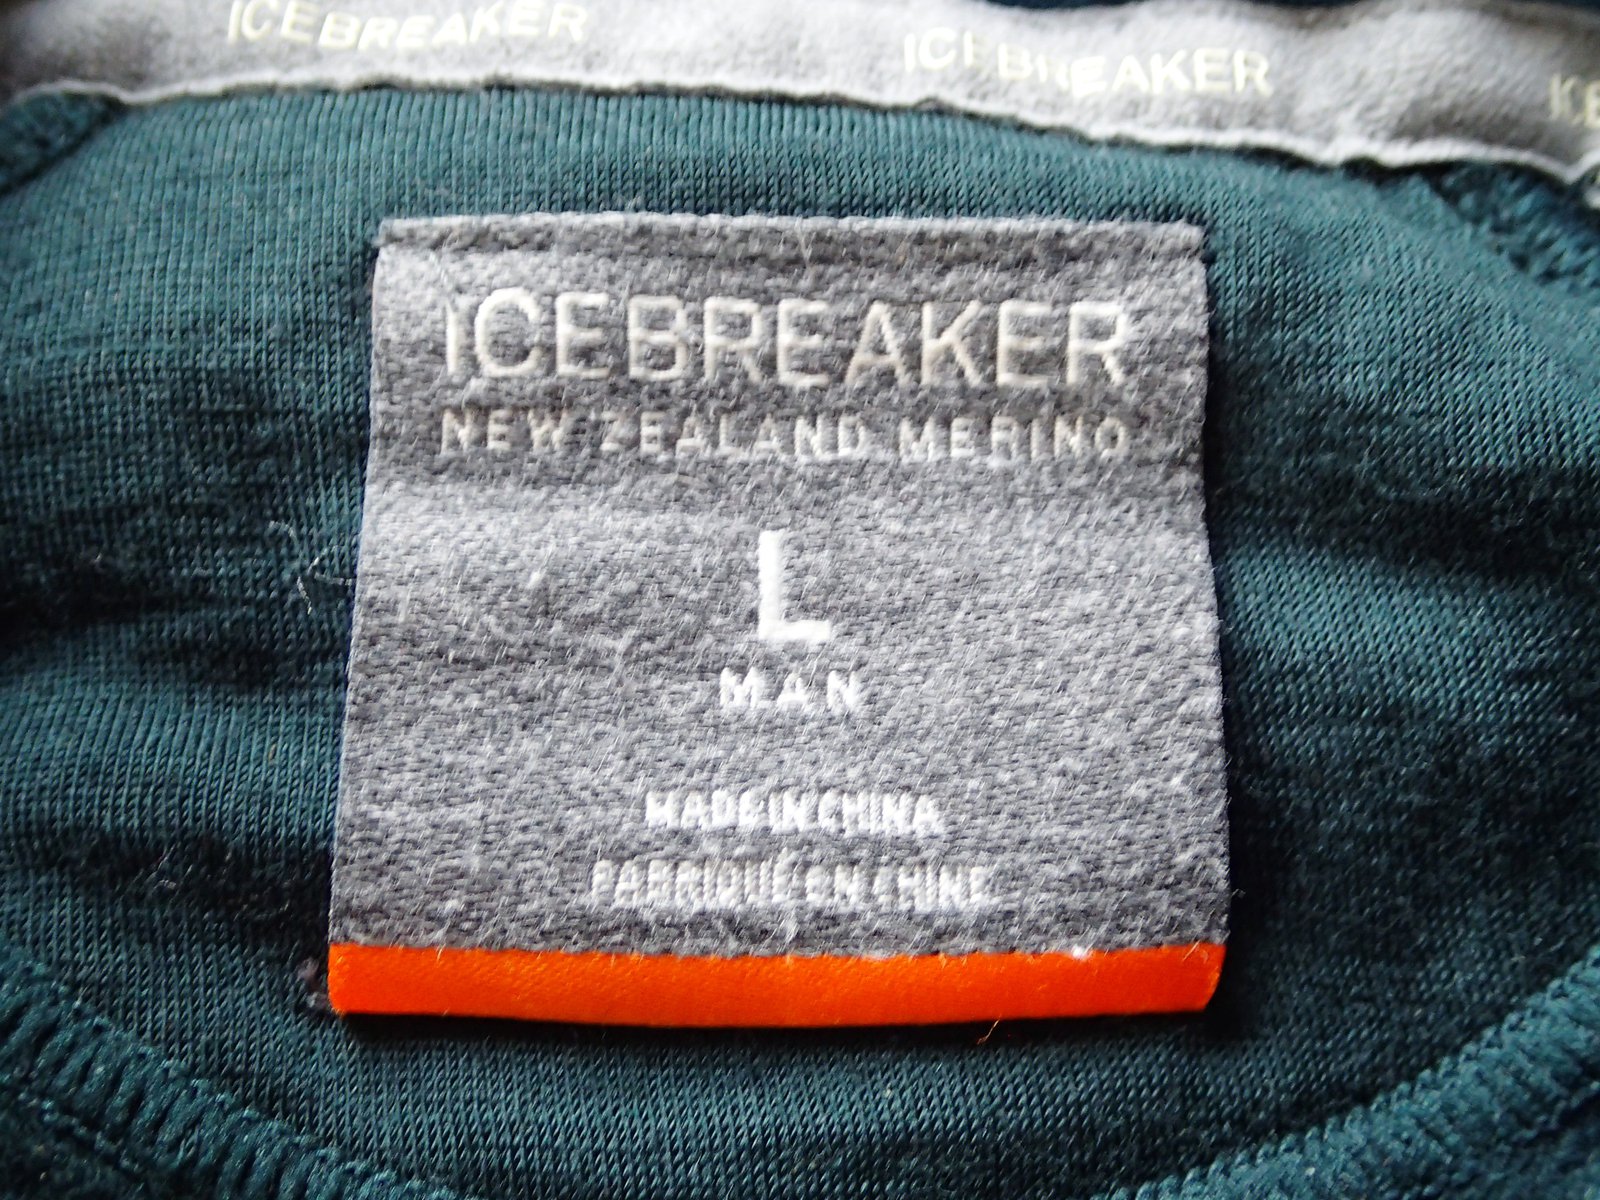 Icebreaker 1